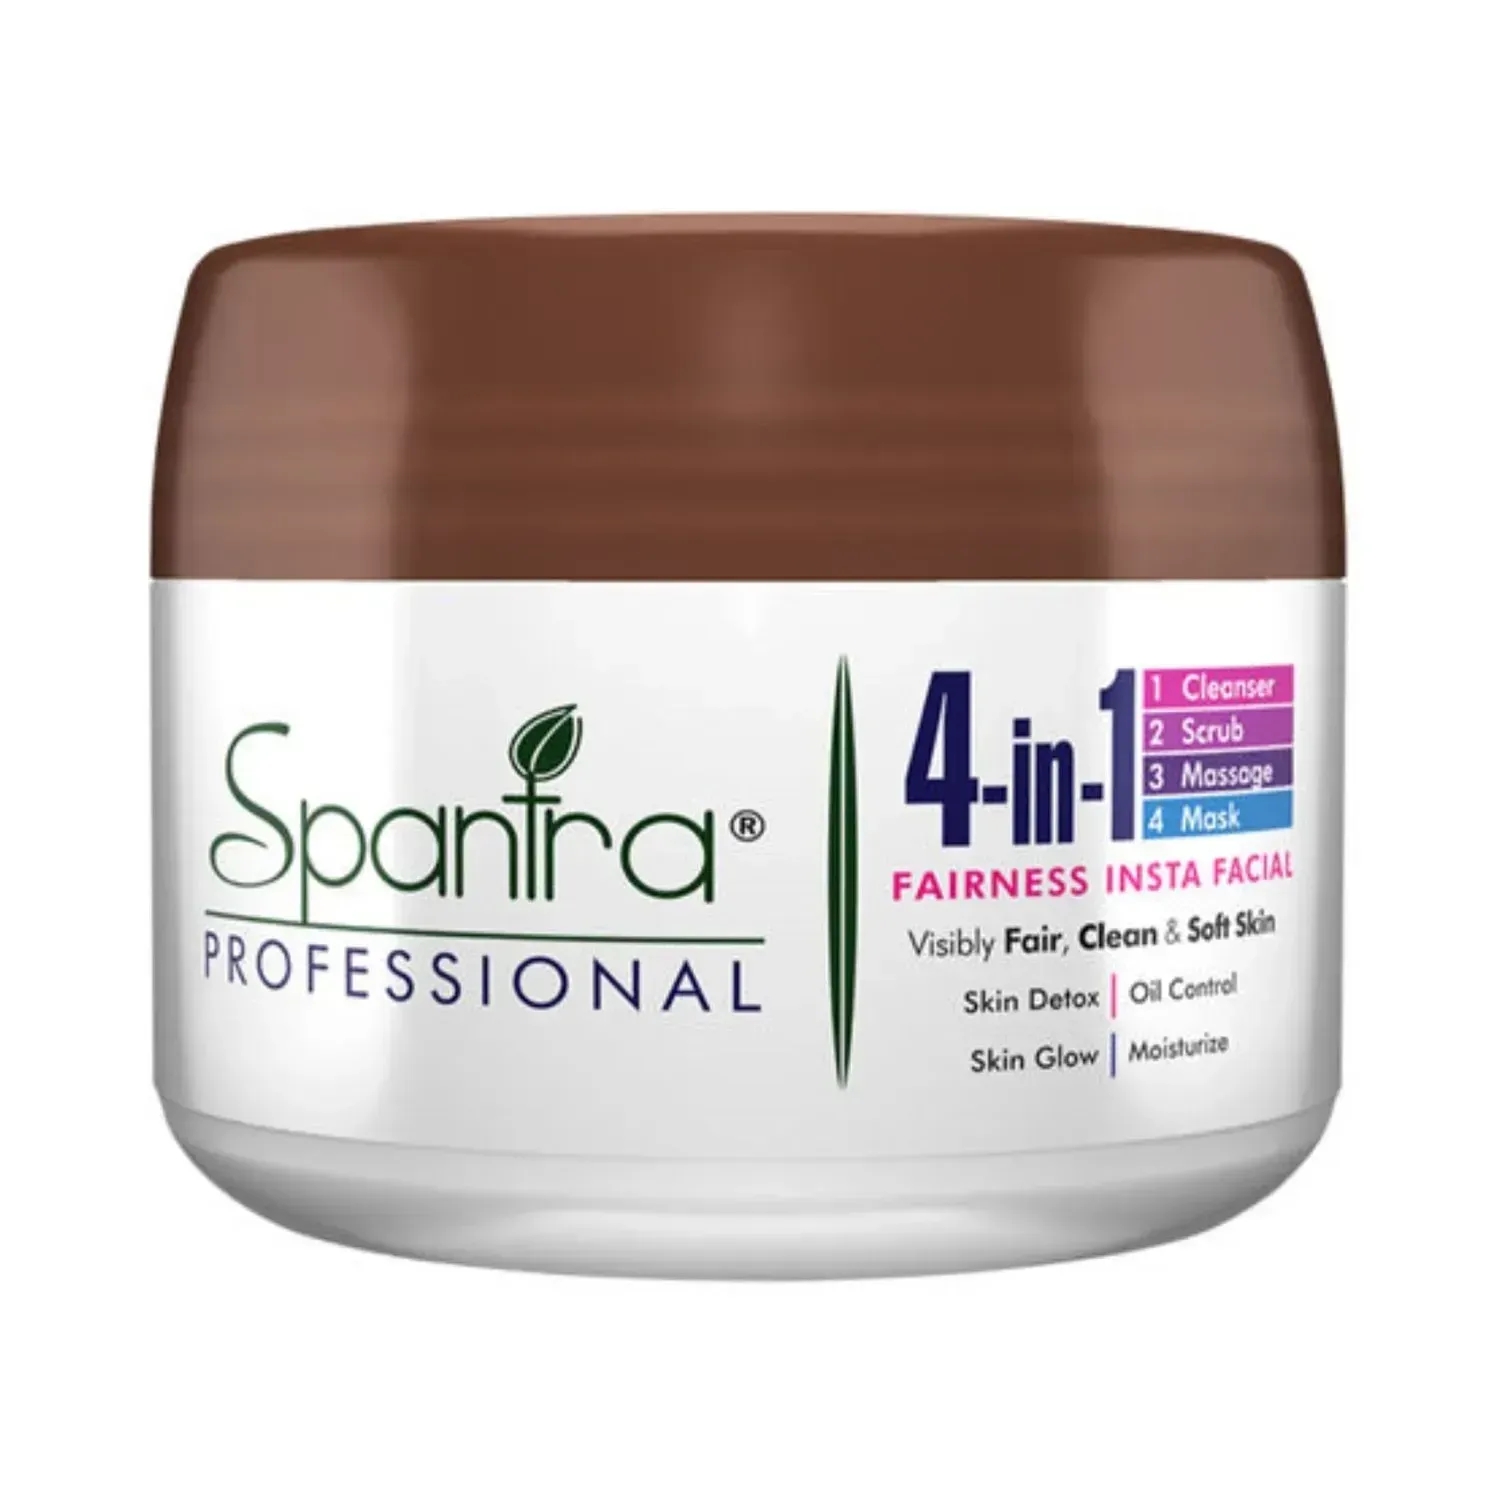 Spantra 4 In 1 Fairness Insta Facial Cleanser Scrub - (500g)